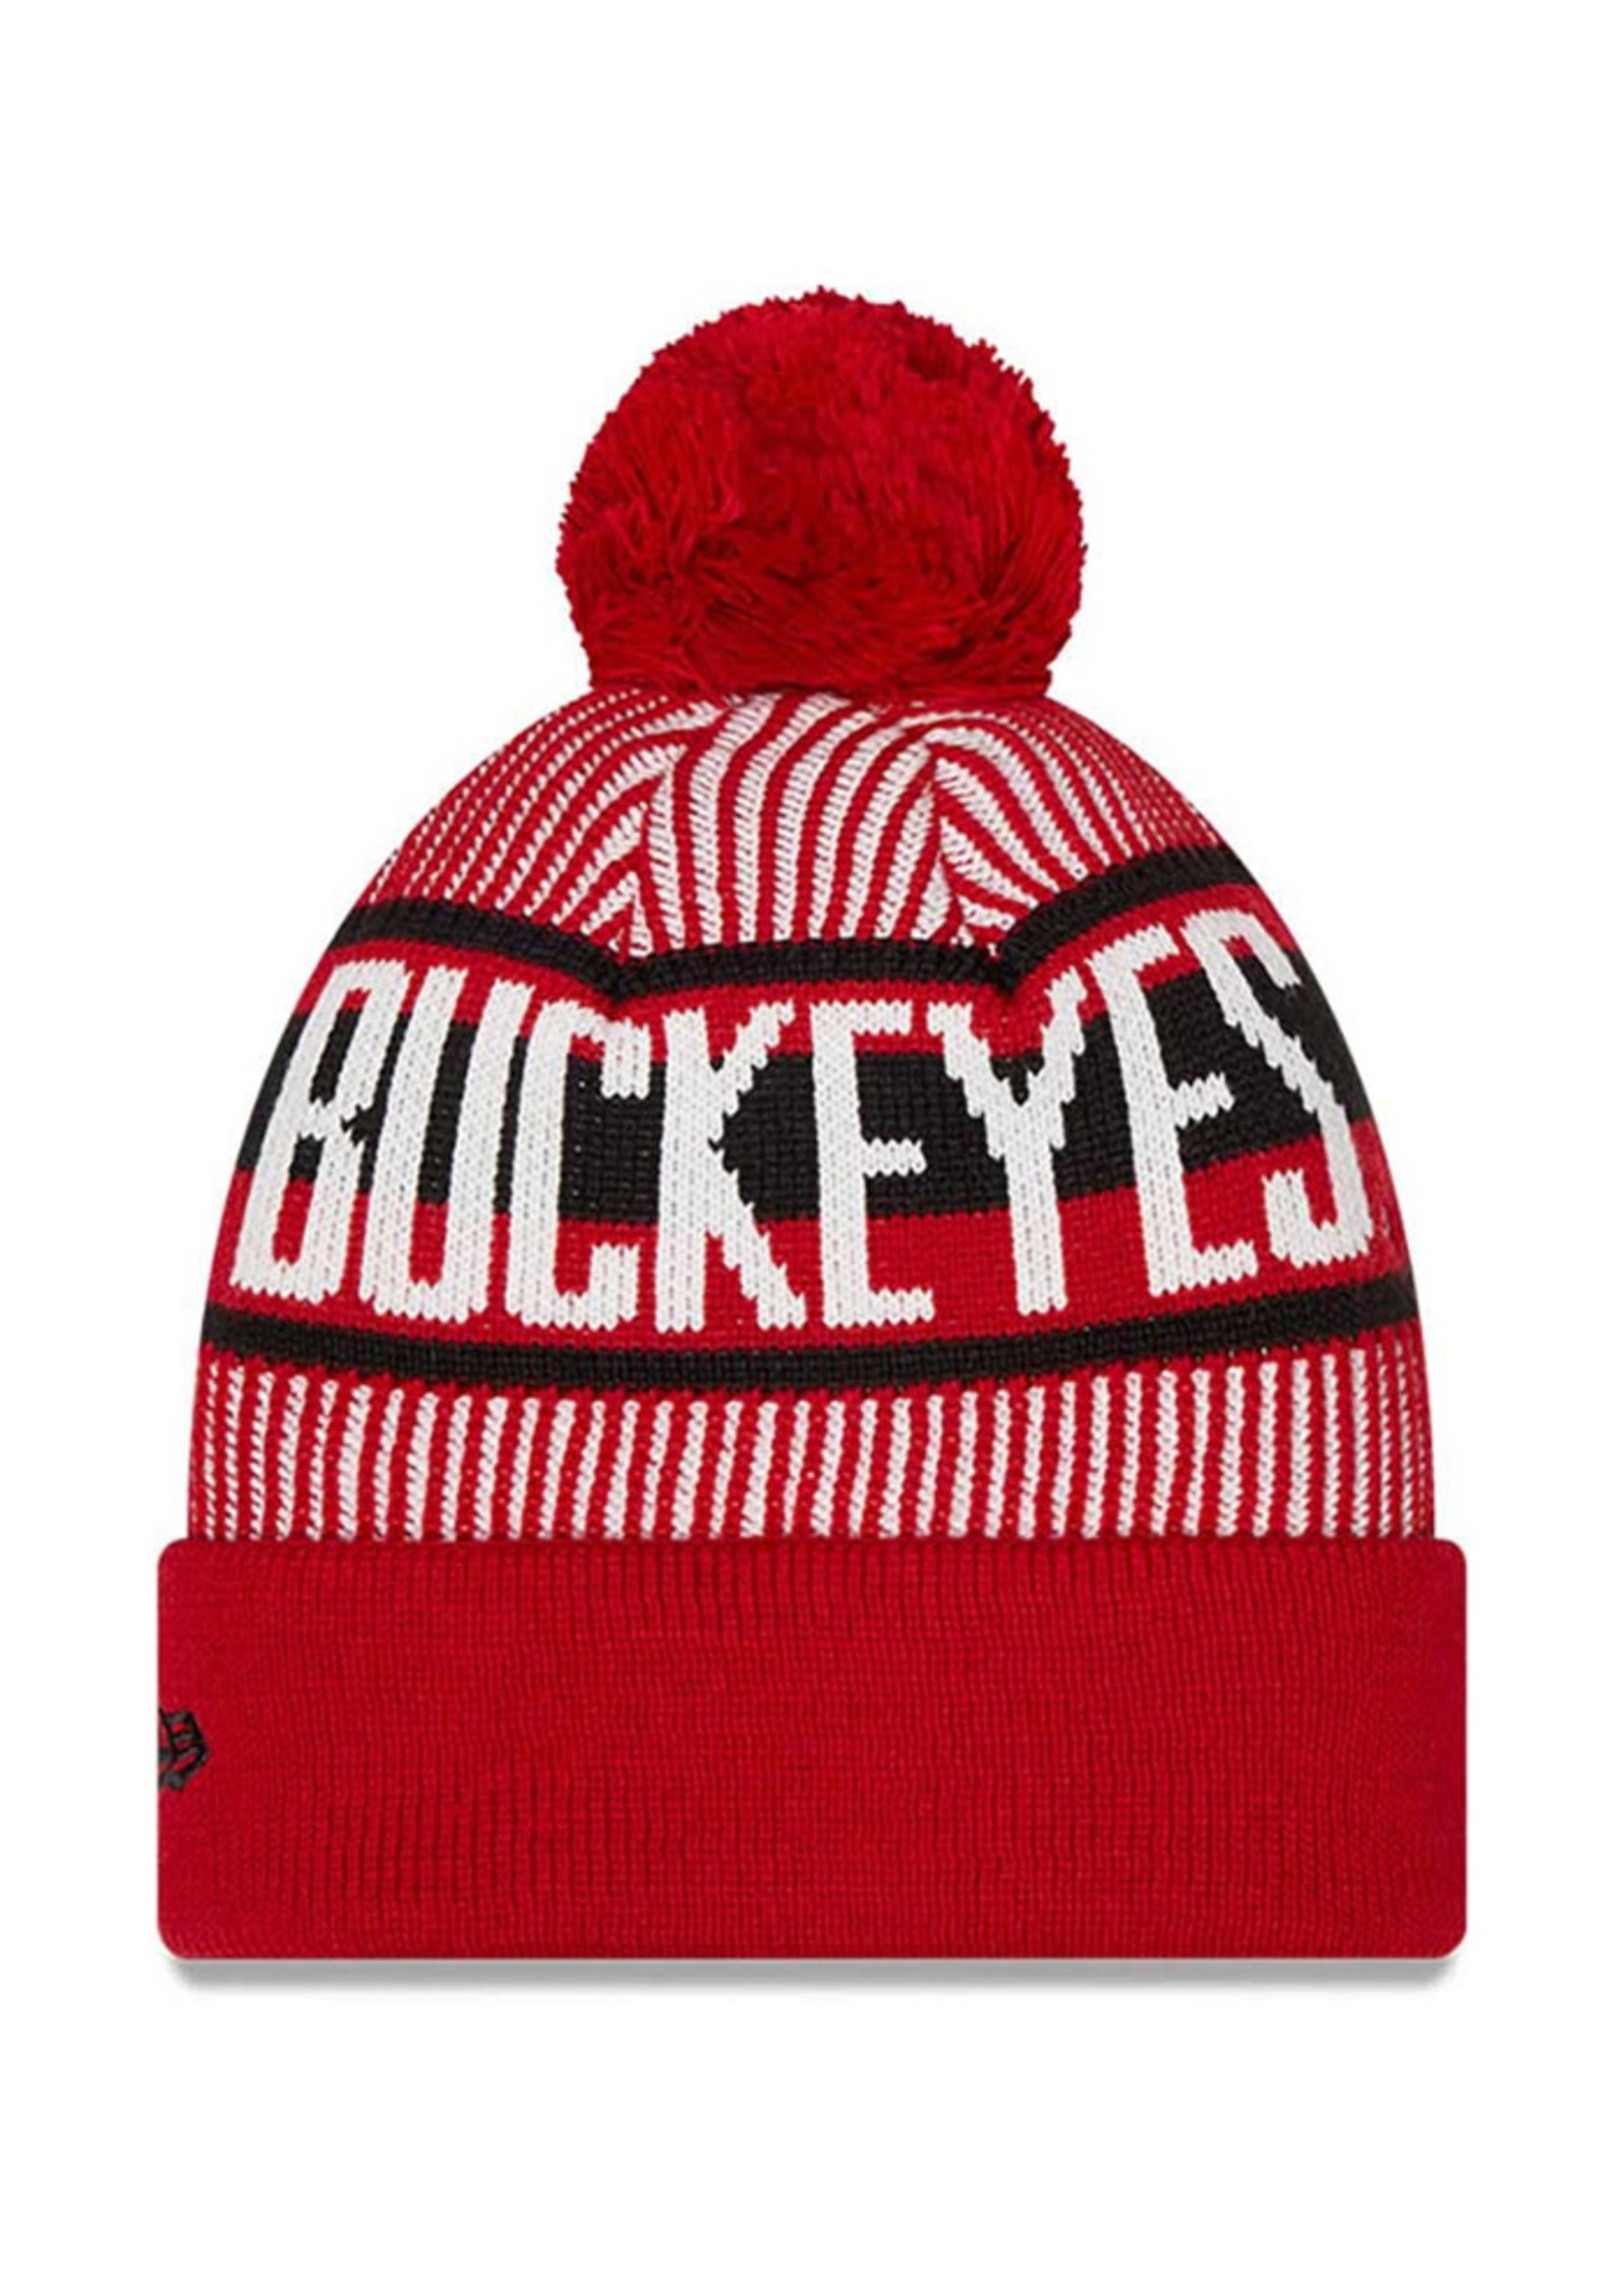 NEW ERA Ohio State Buckeyes New Era Red Striped Knit Hat